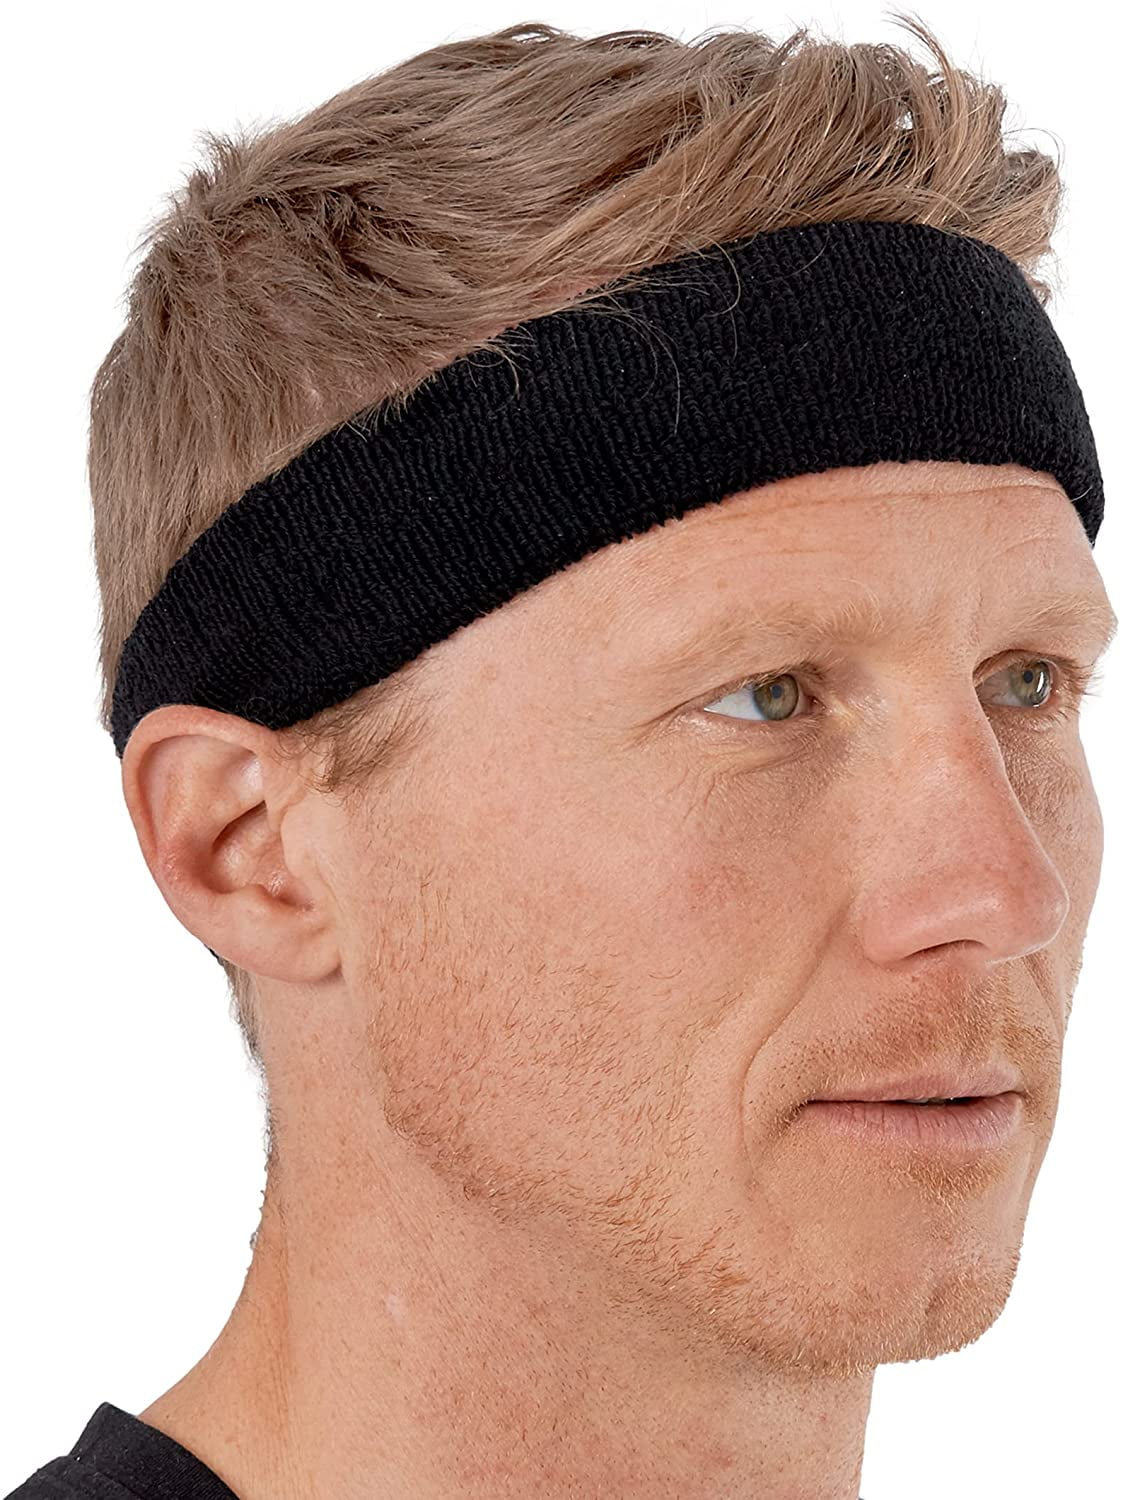 Outdoor Head Tie Running Football Headband Sweat Hair Band Turban for Men Women 